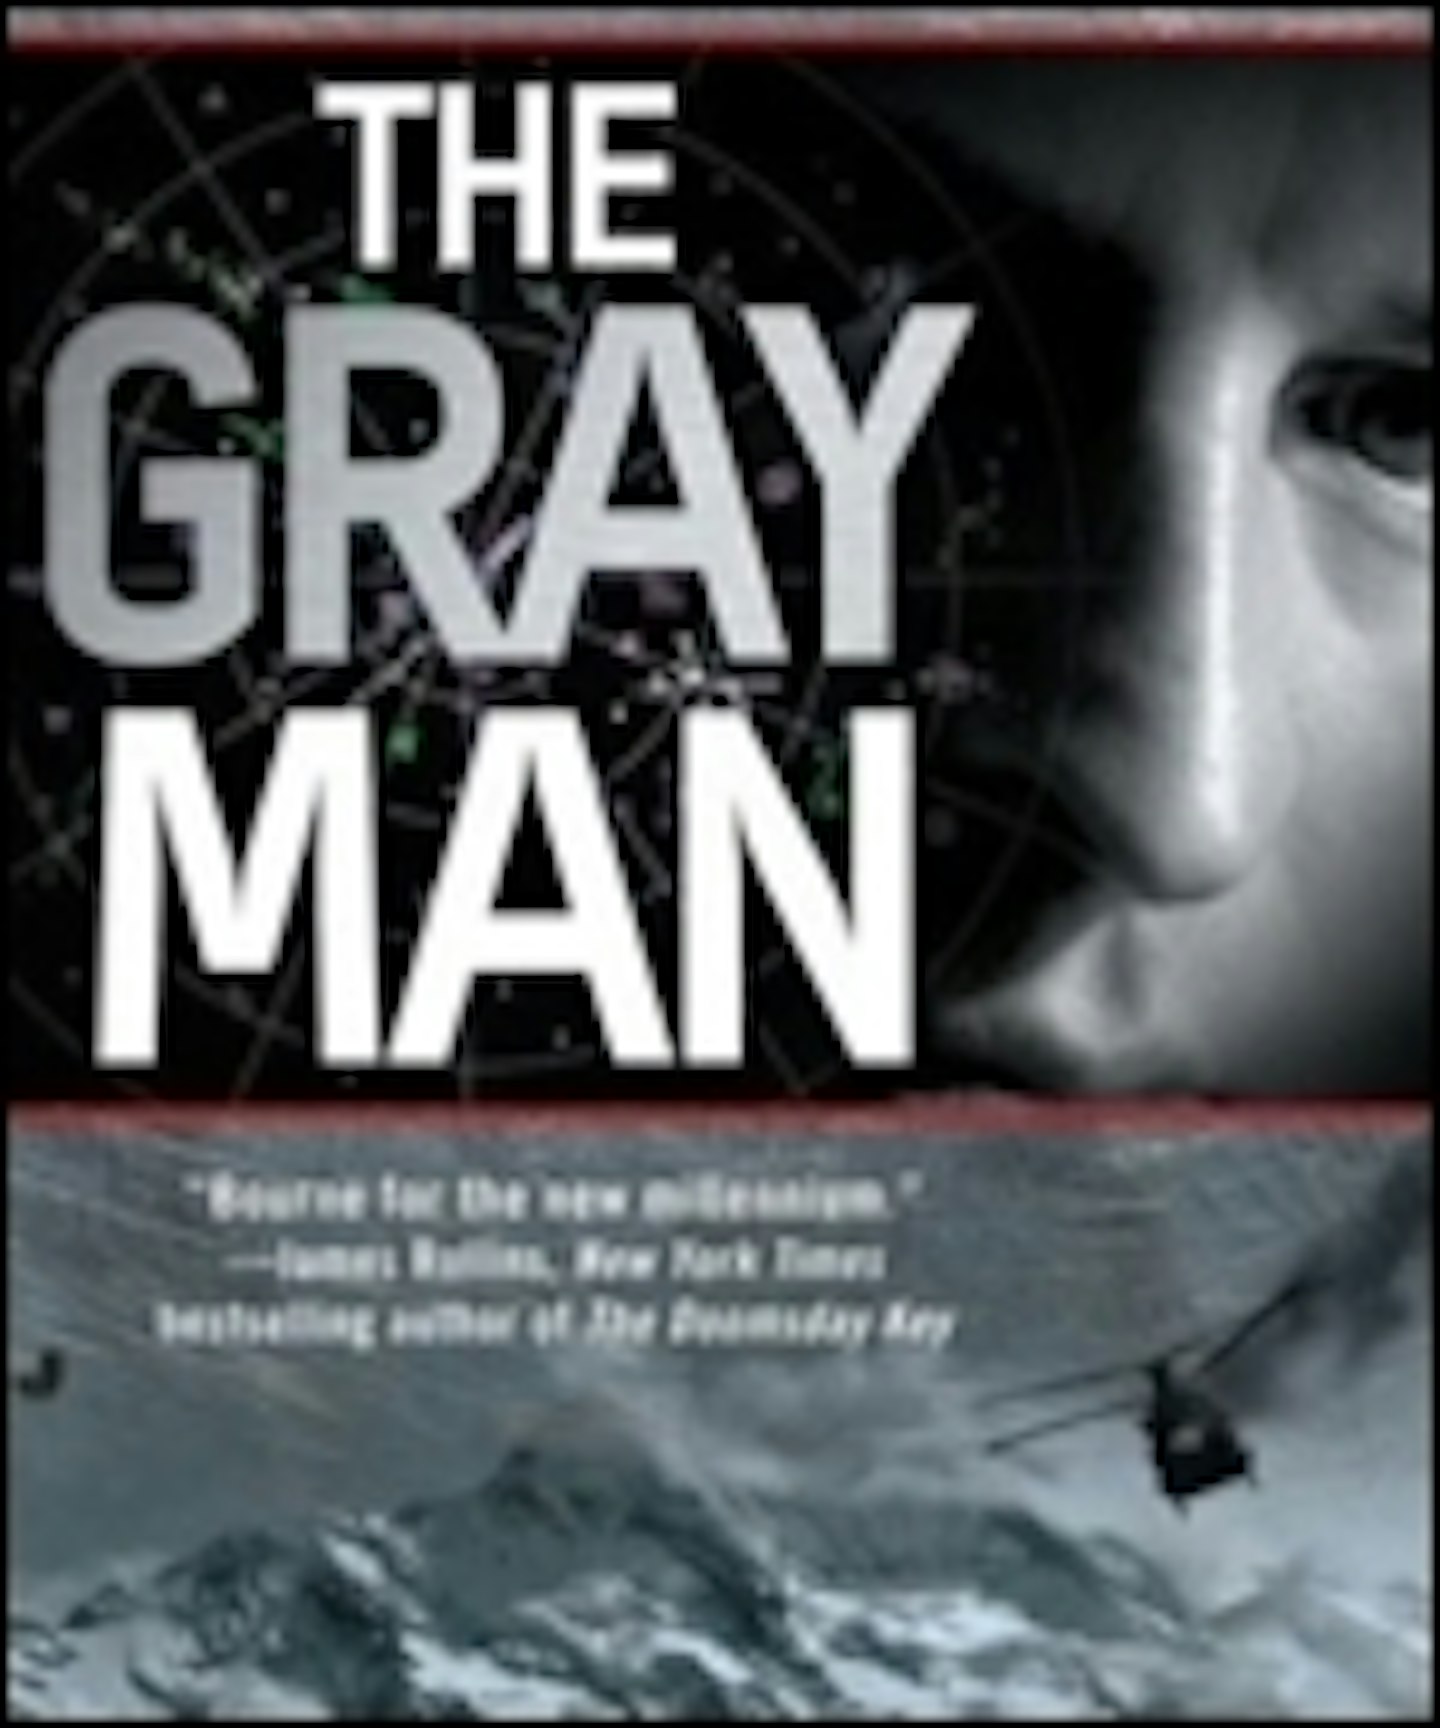 Adam Cozad Hunting The Gray Man